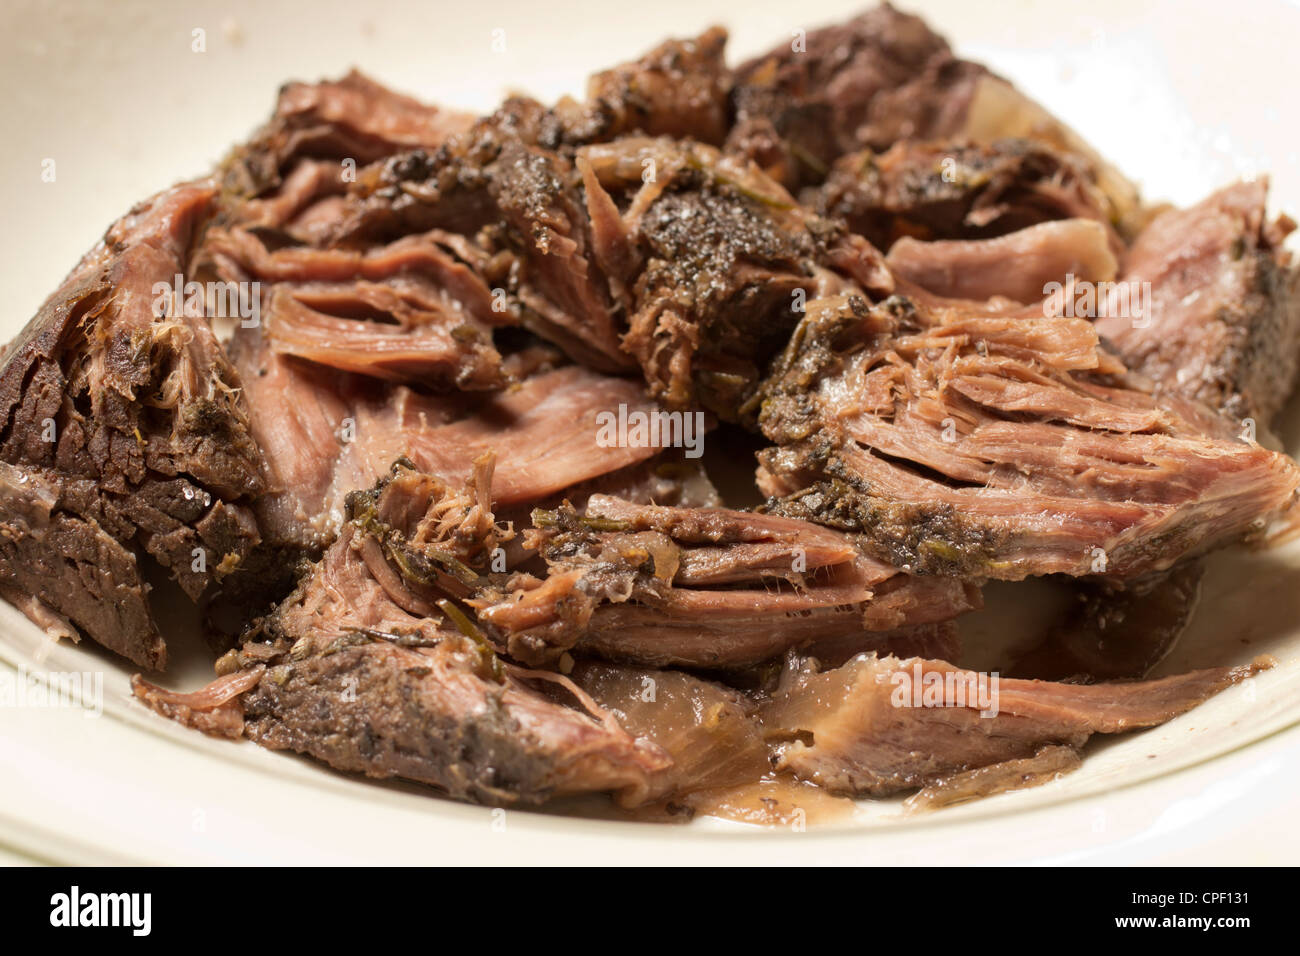 cooked, boneless mutton Stock Photo